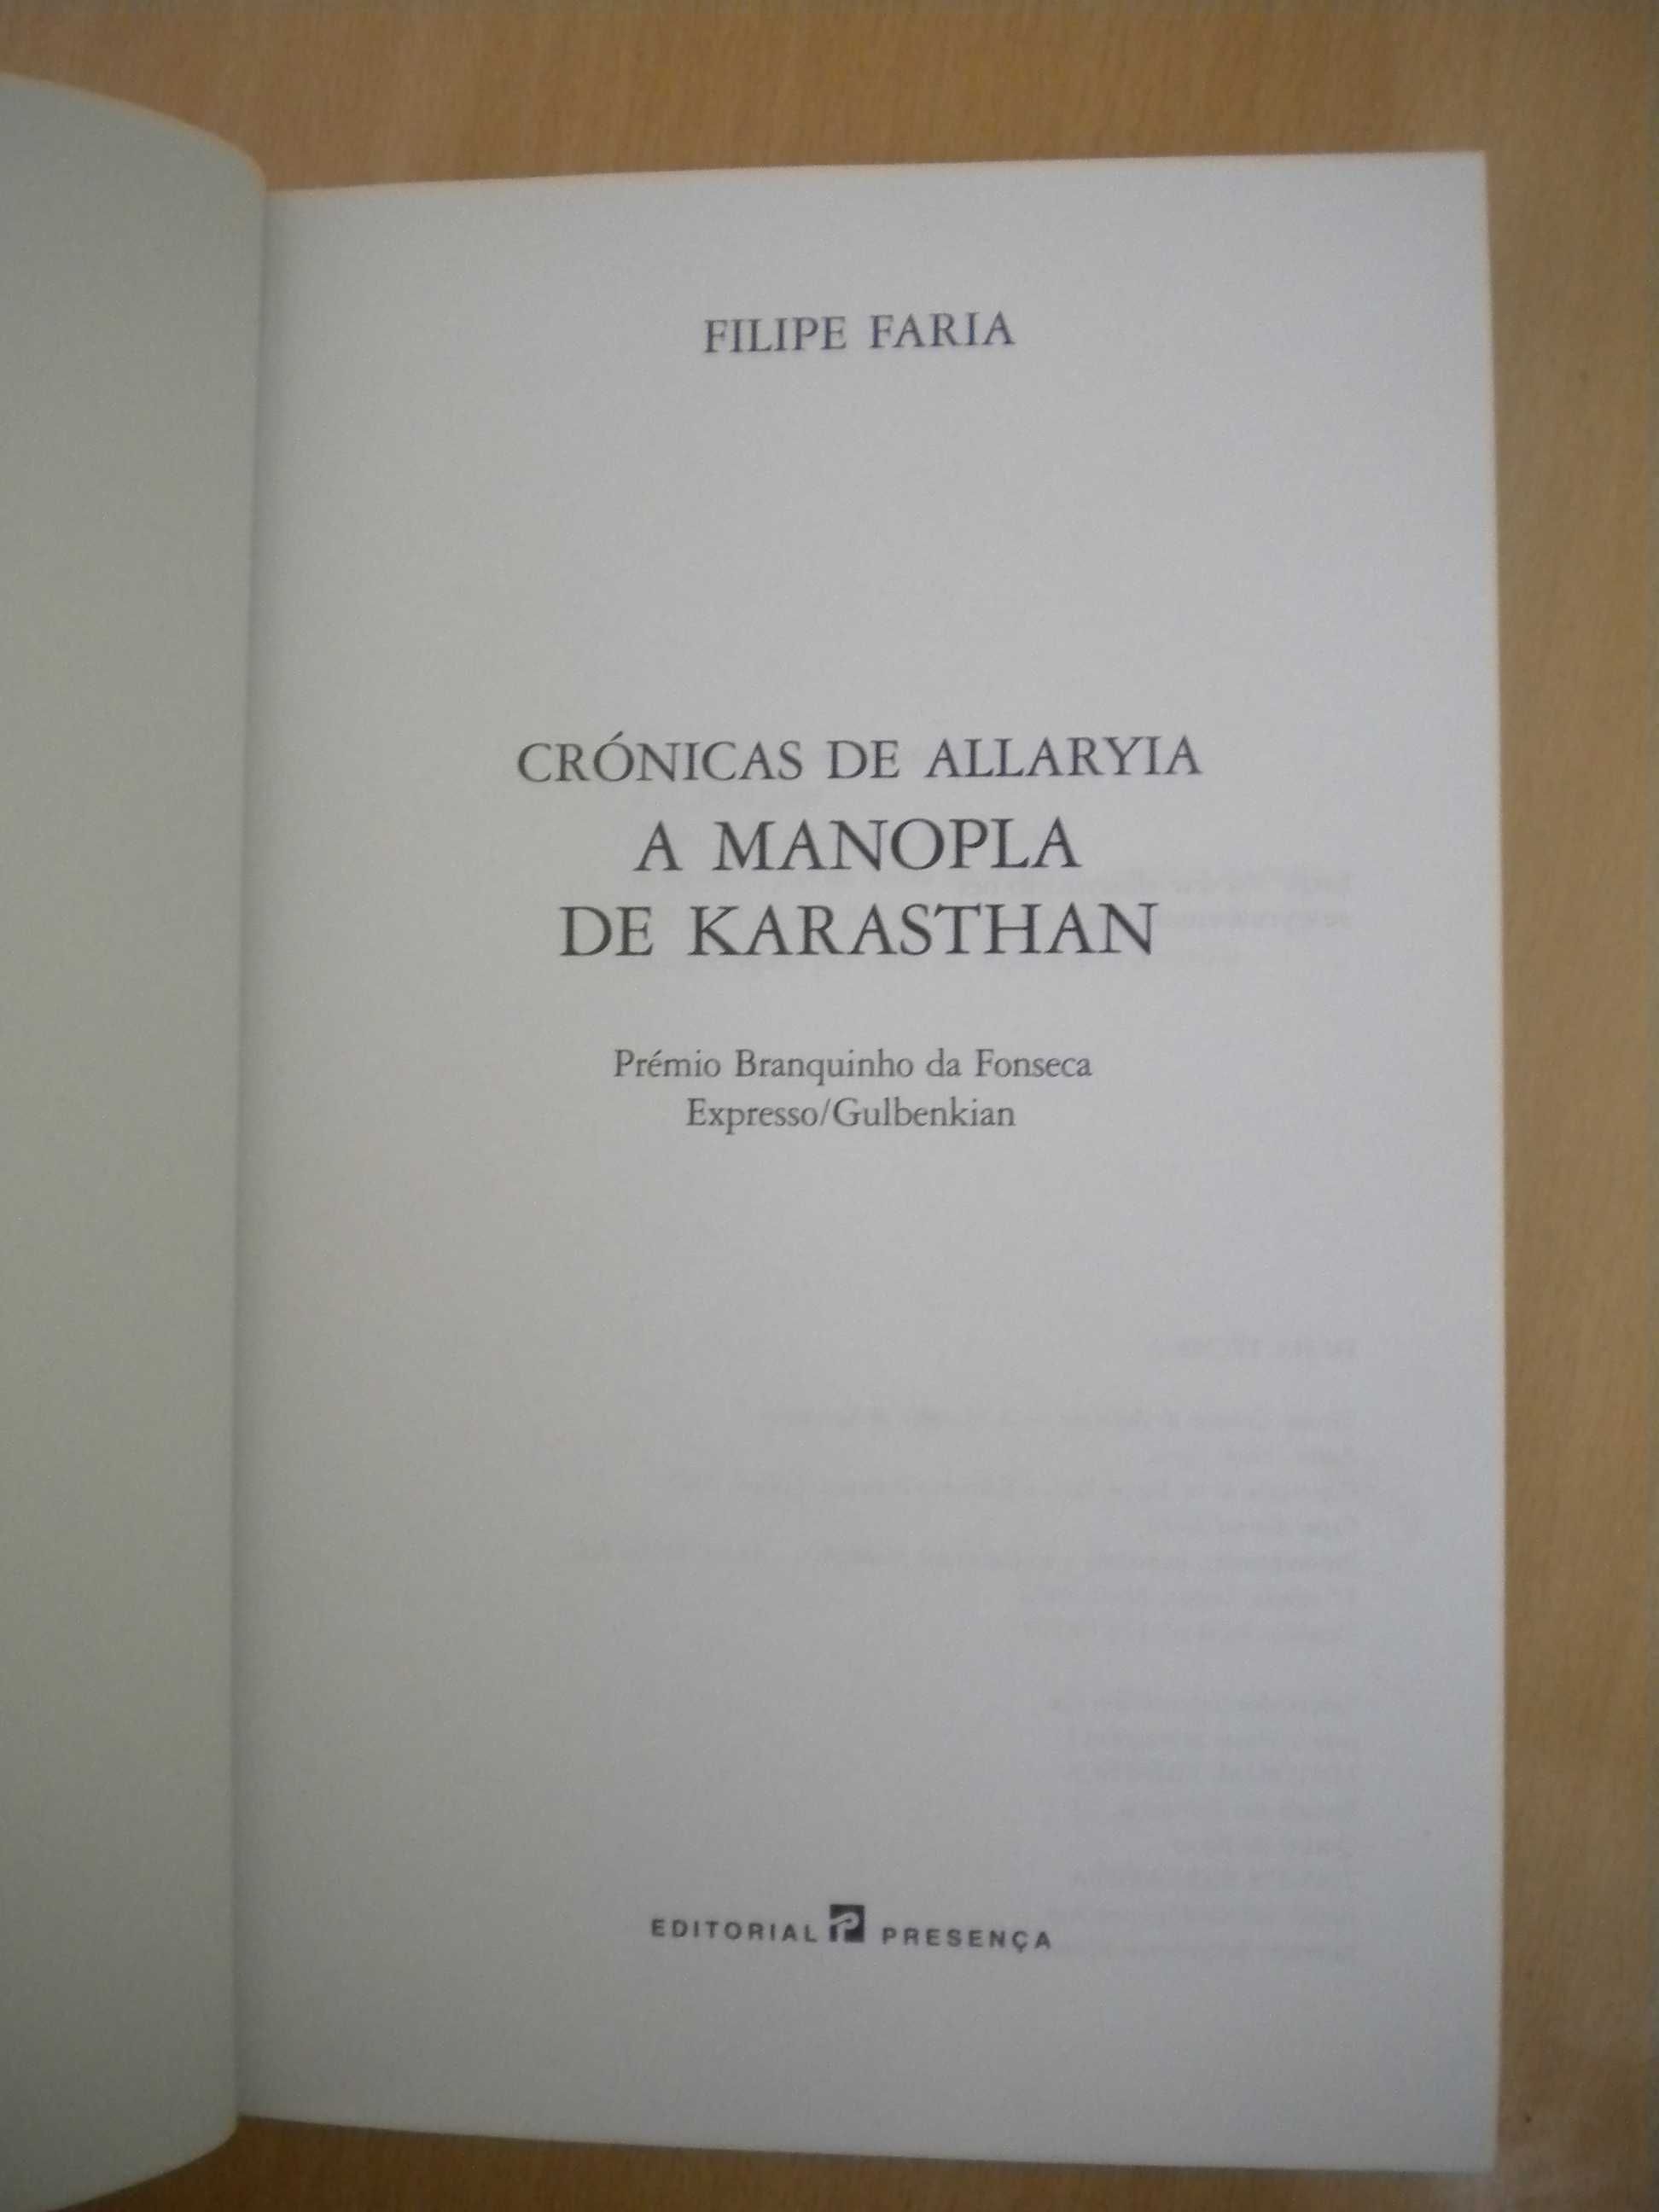 A Manopla de Karasthan
de Filipe Faria